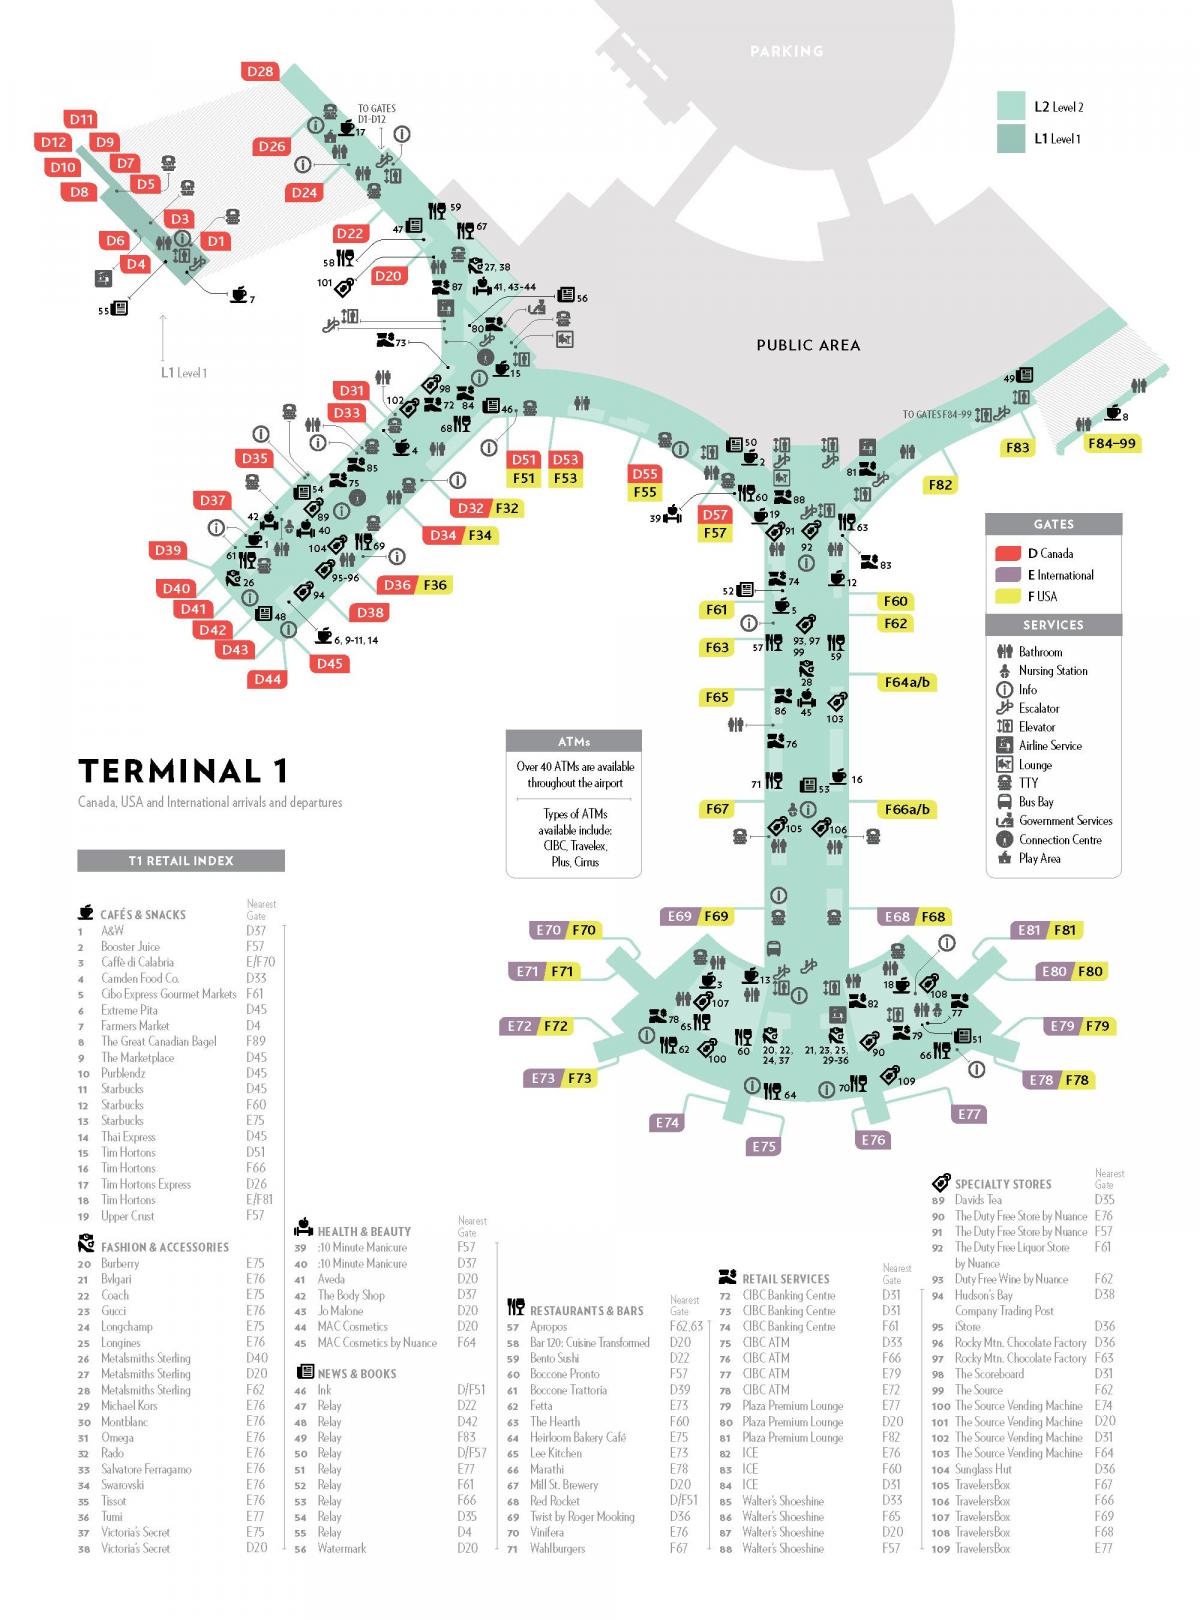 pearson terminal 1 mappa